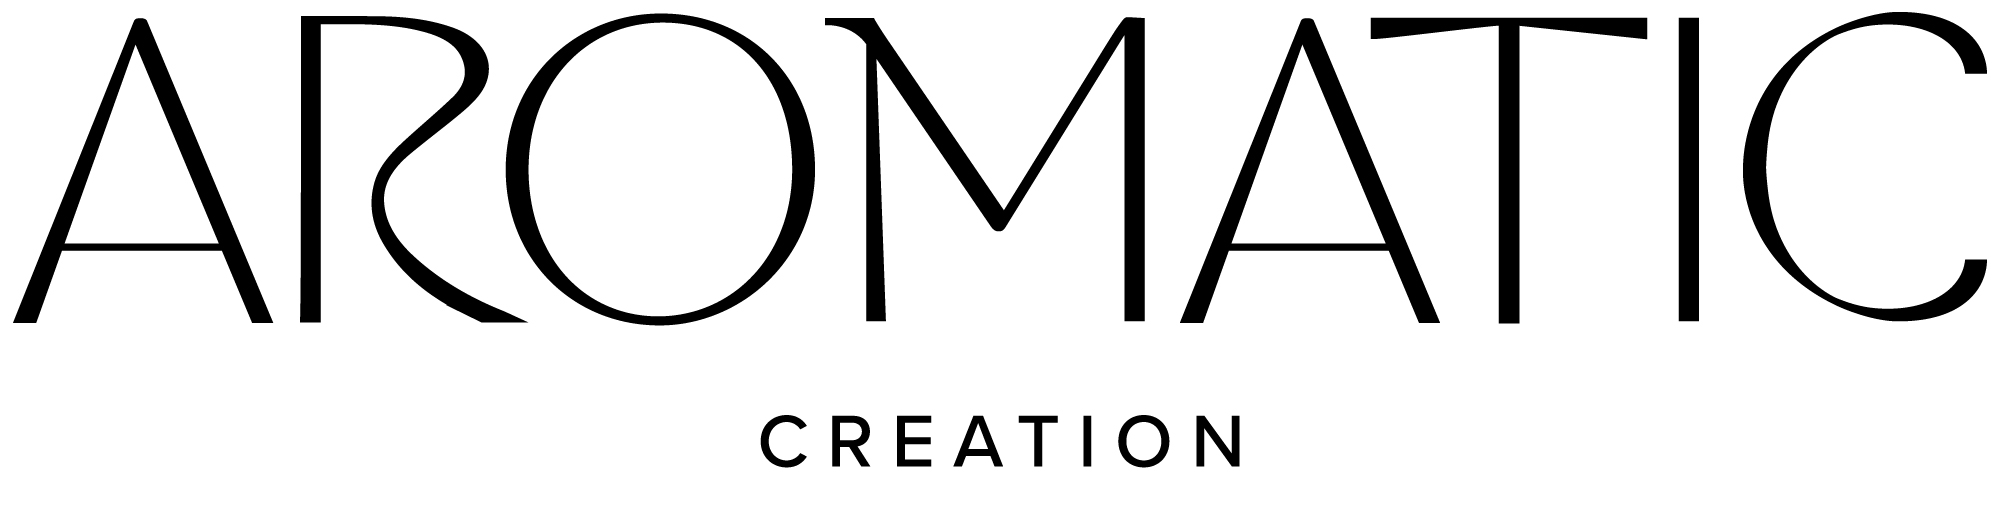 Aromatic Creation Logo